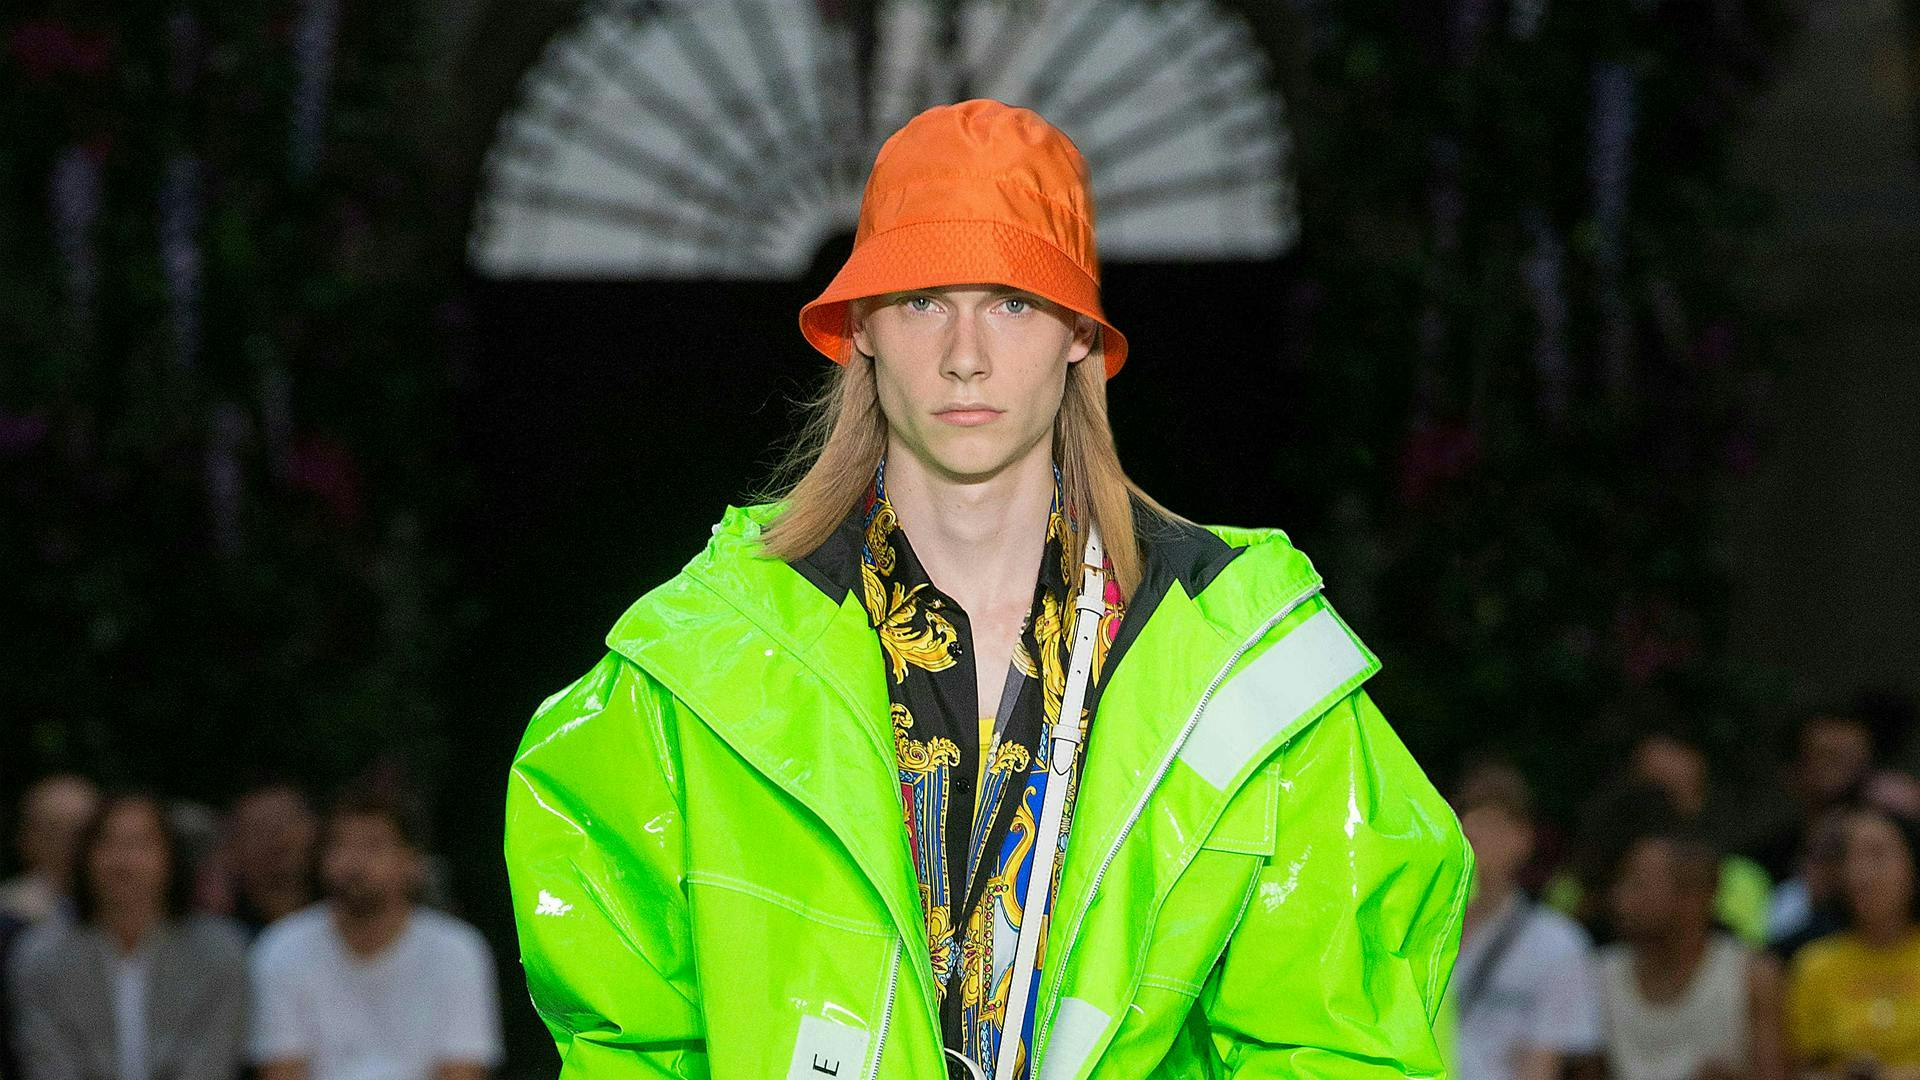 apparel clothing person human coat raincoat jacket